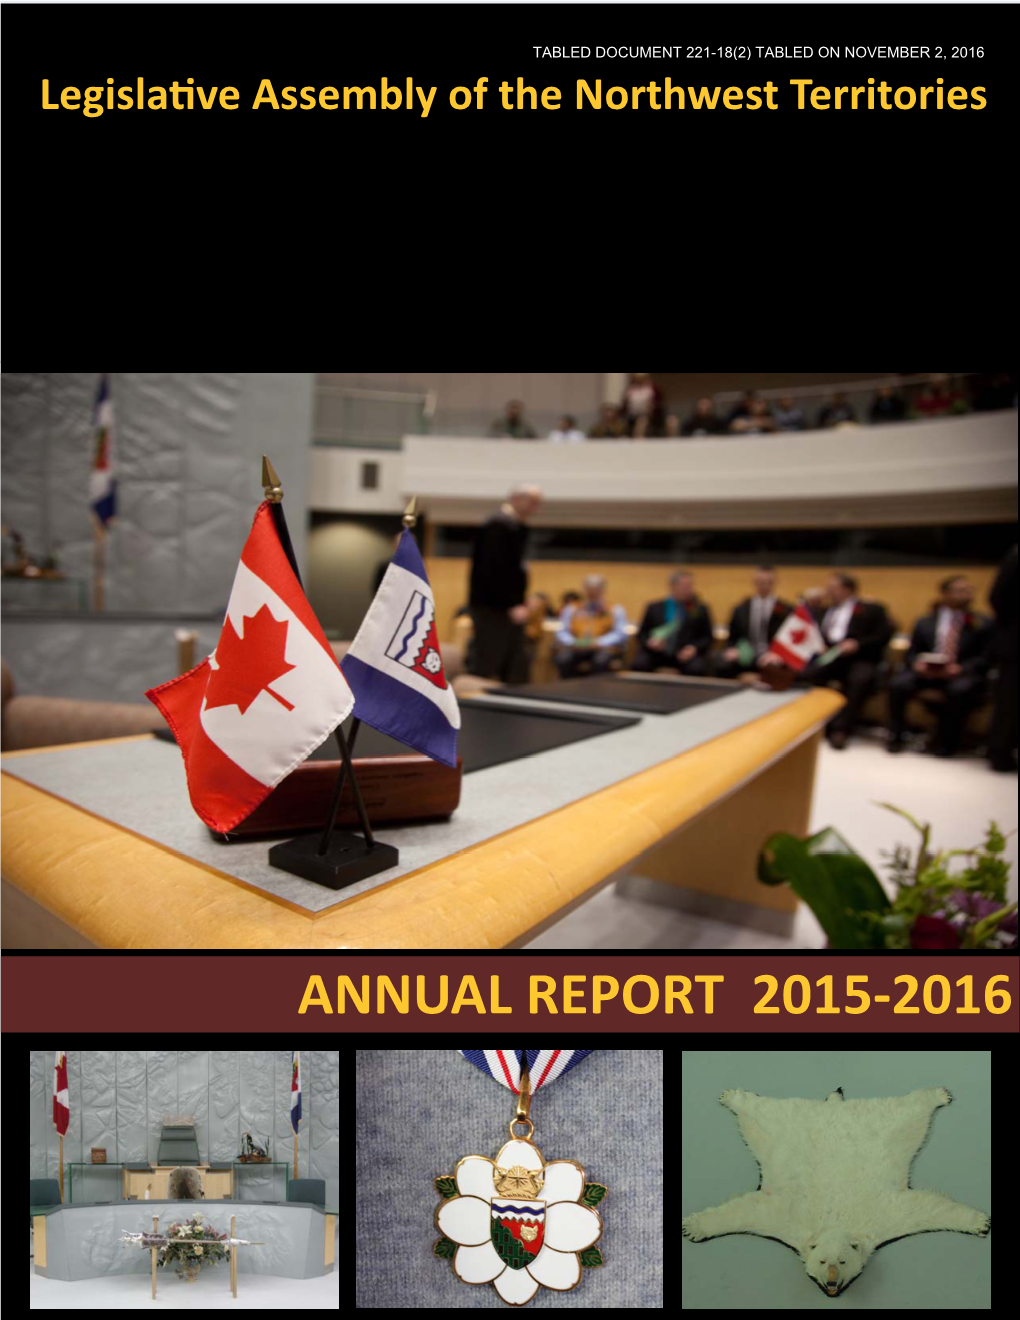 Annual Report 2015-2016 FINAL DRAFT.Pub